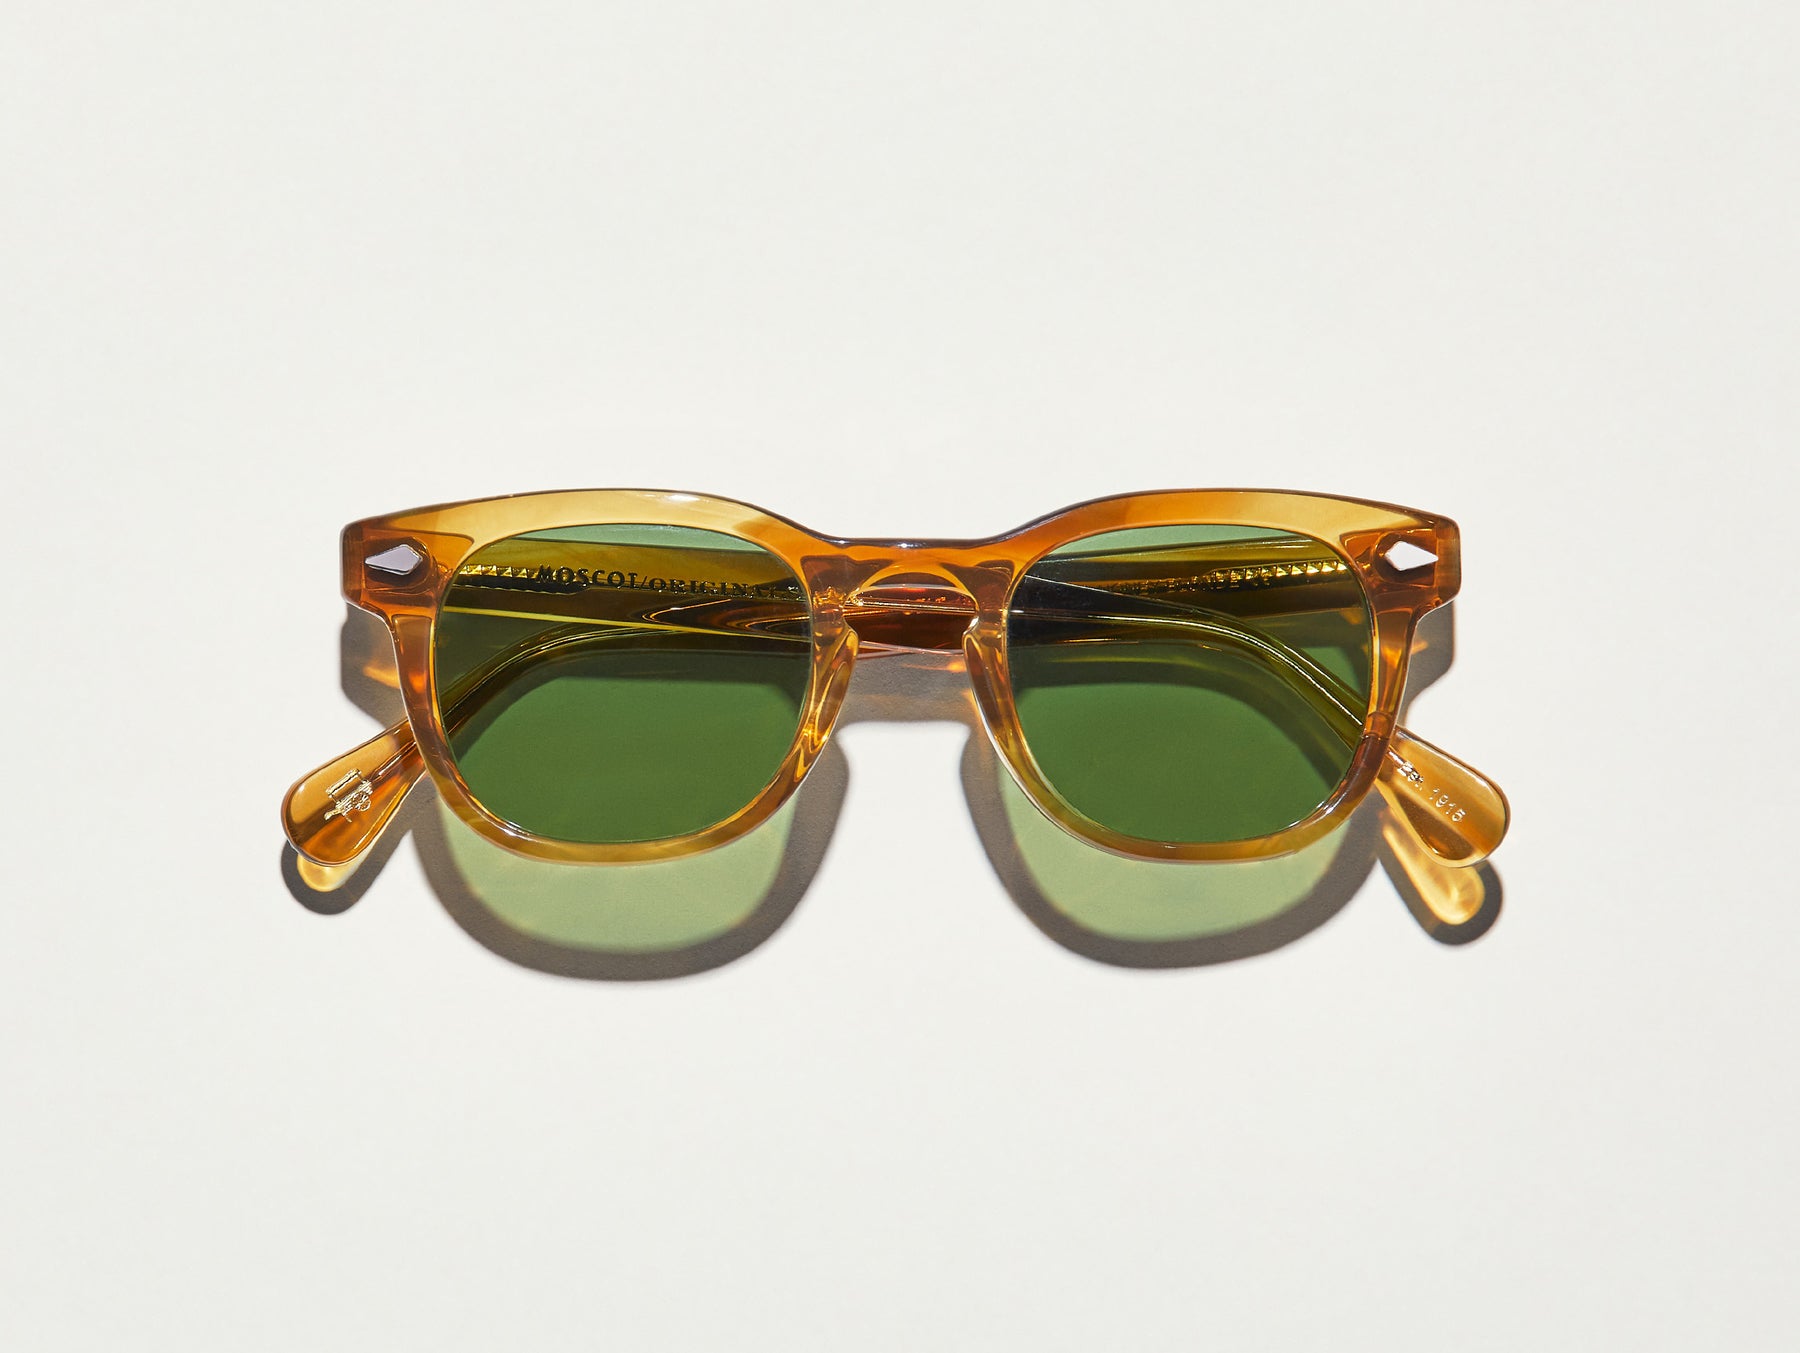 The GELT SUN in Honey Blonde with Calibar Green Glass Lenses